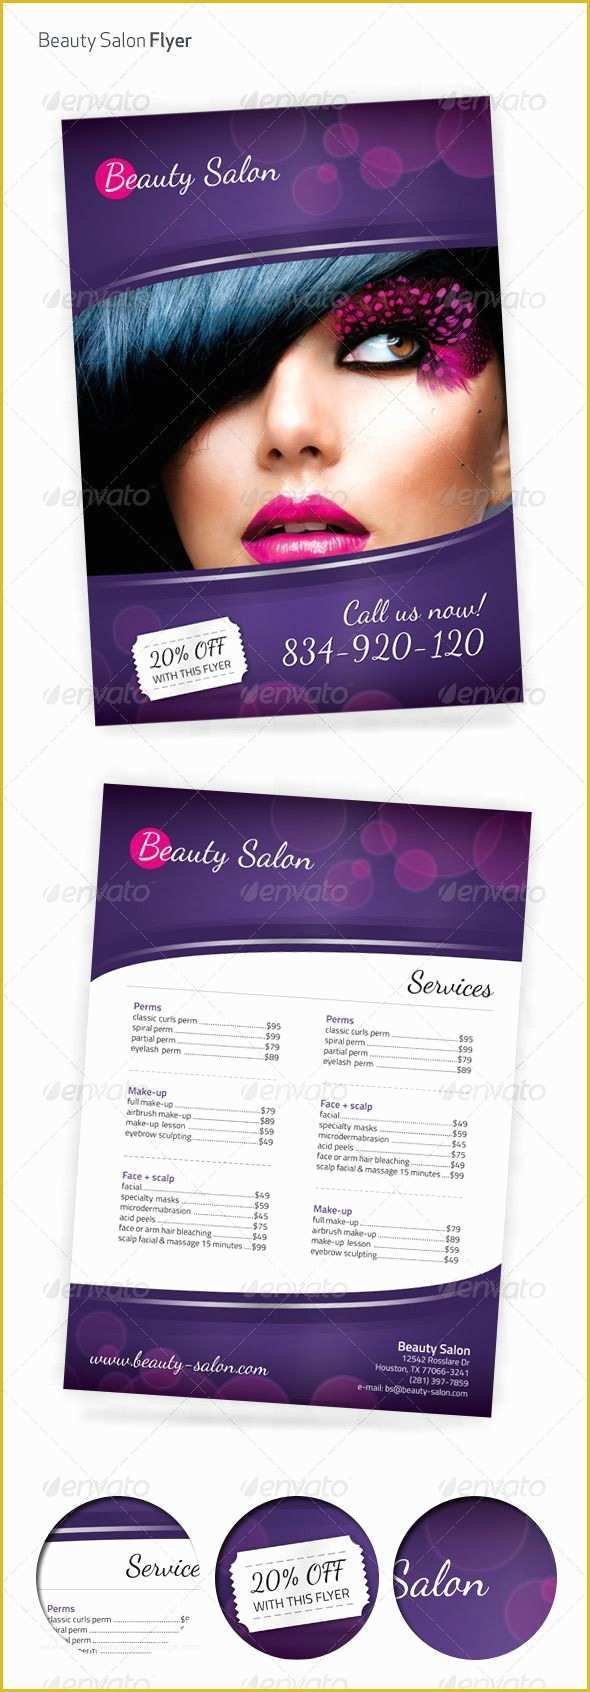 Beauty Salon Flyer Templates Free Of Beauty Salon A4 Flyer